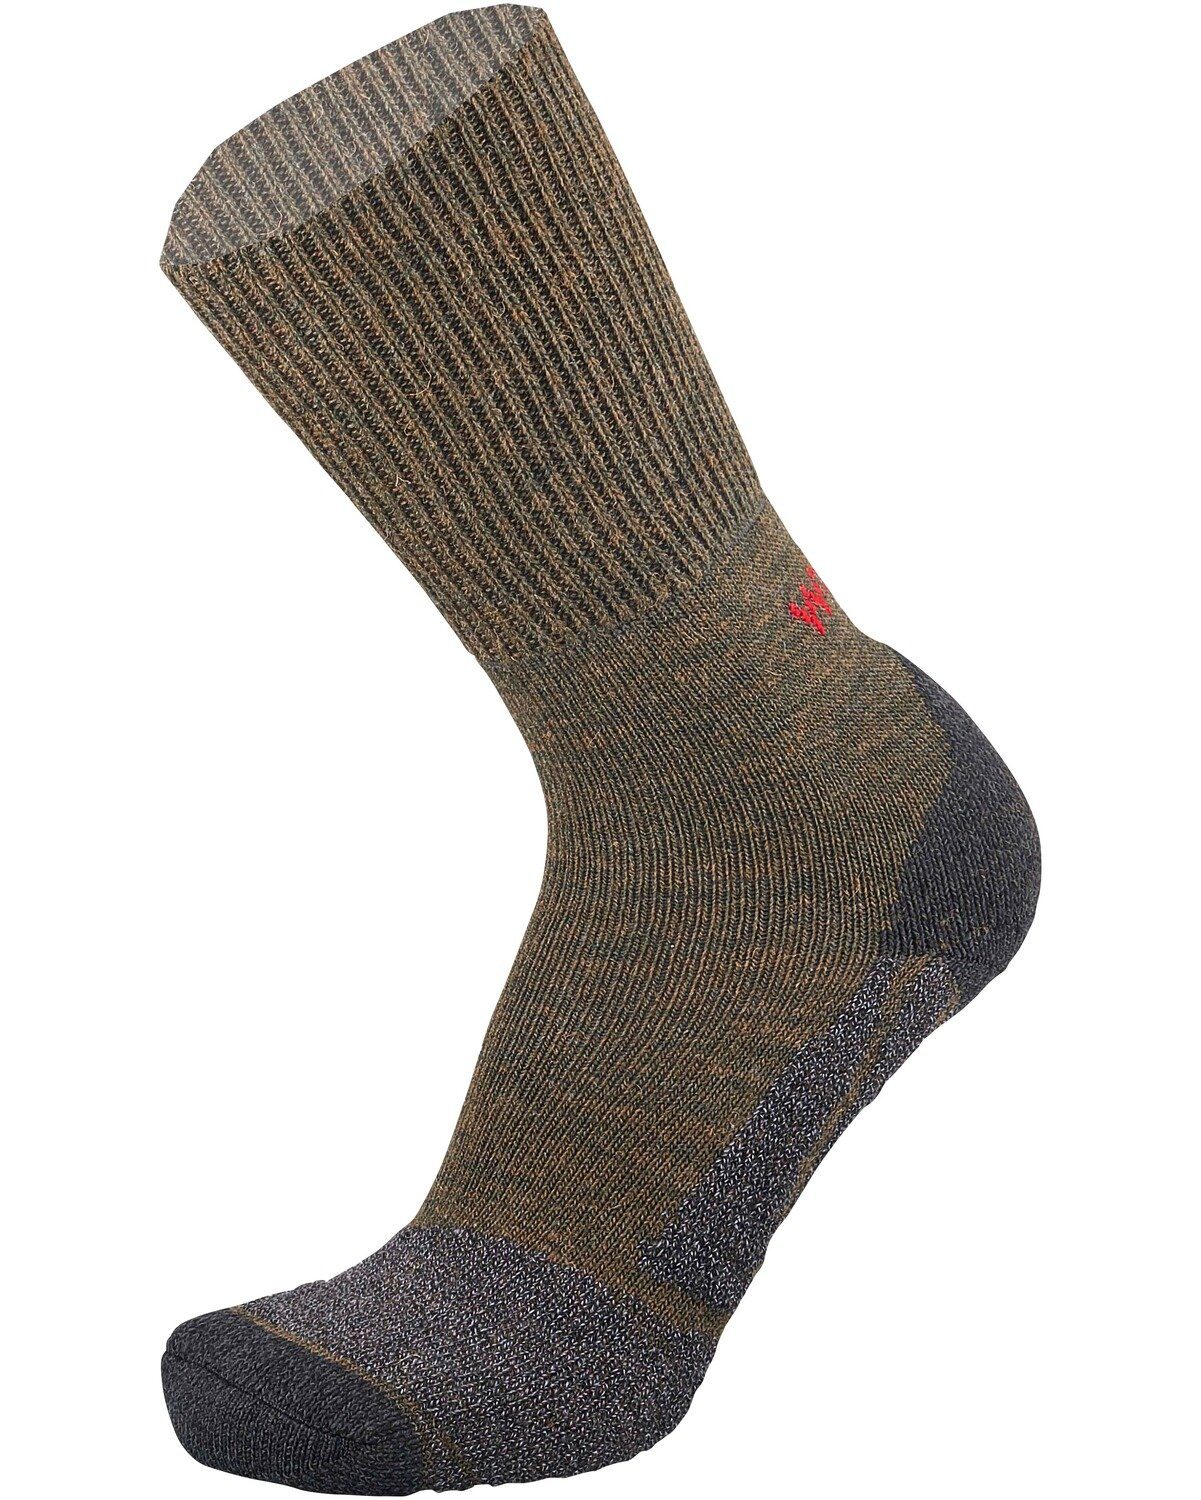 Mountain Socken Socke All S03 Comfort Trek Merino wapiti